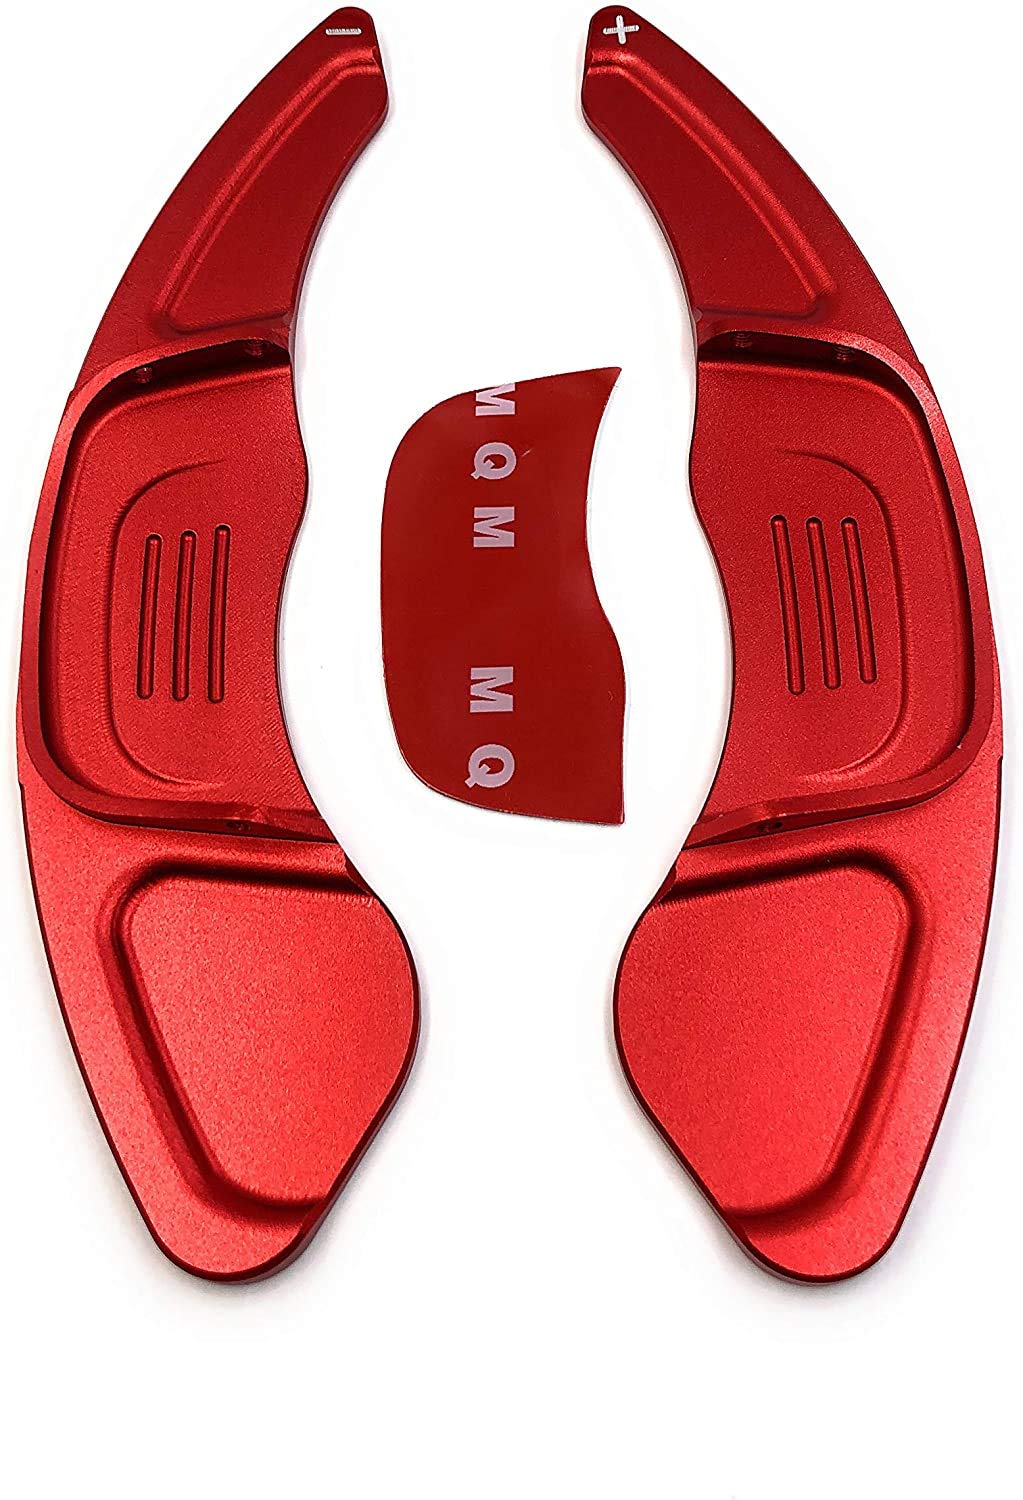 Onlineworld2013 Schaltwippen Dsg Shift Paddle Kompatibel mit Golf 7 GTI R GTD Polo GTI 20 Scirocco FL Rot Eloxiert von Onlineworld2013